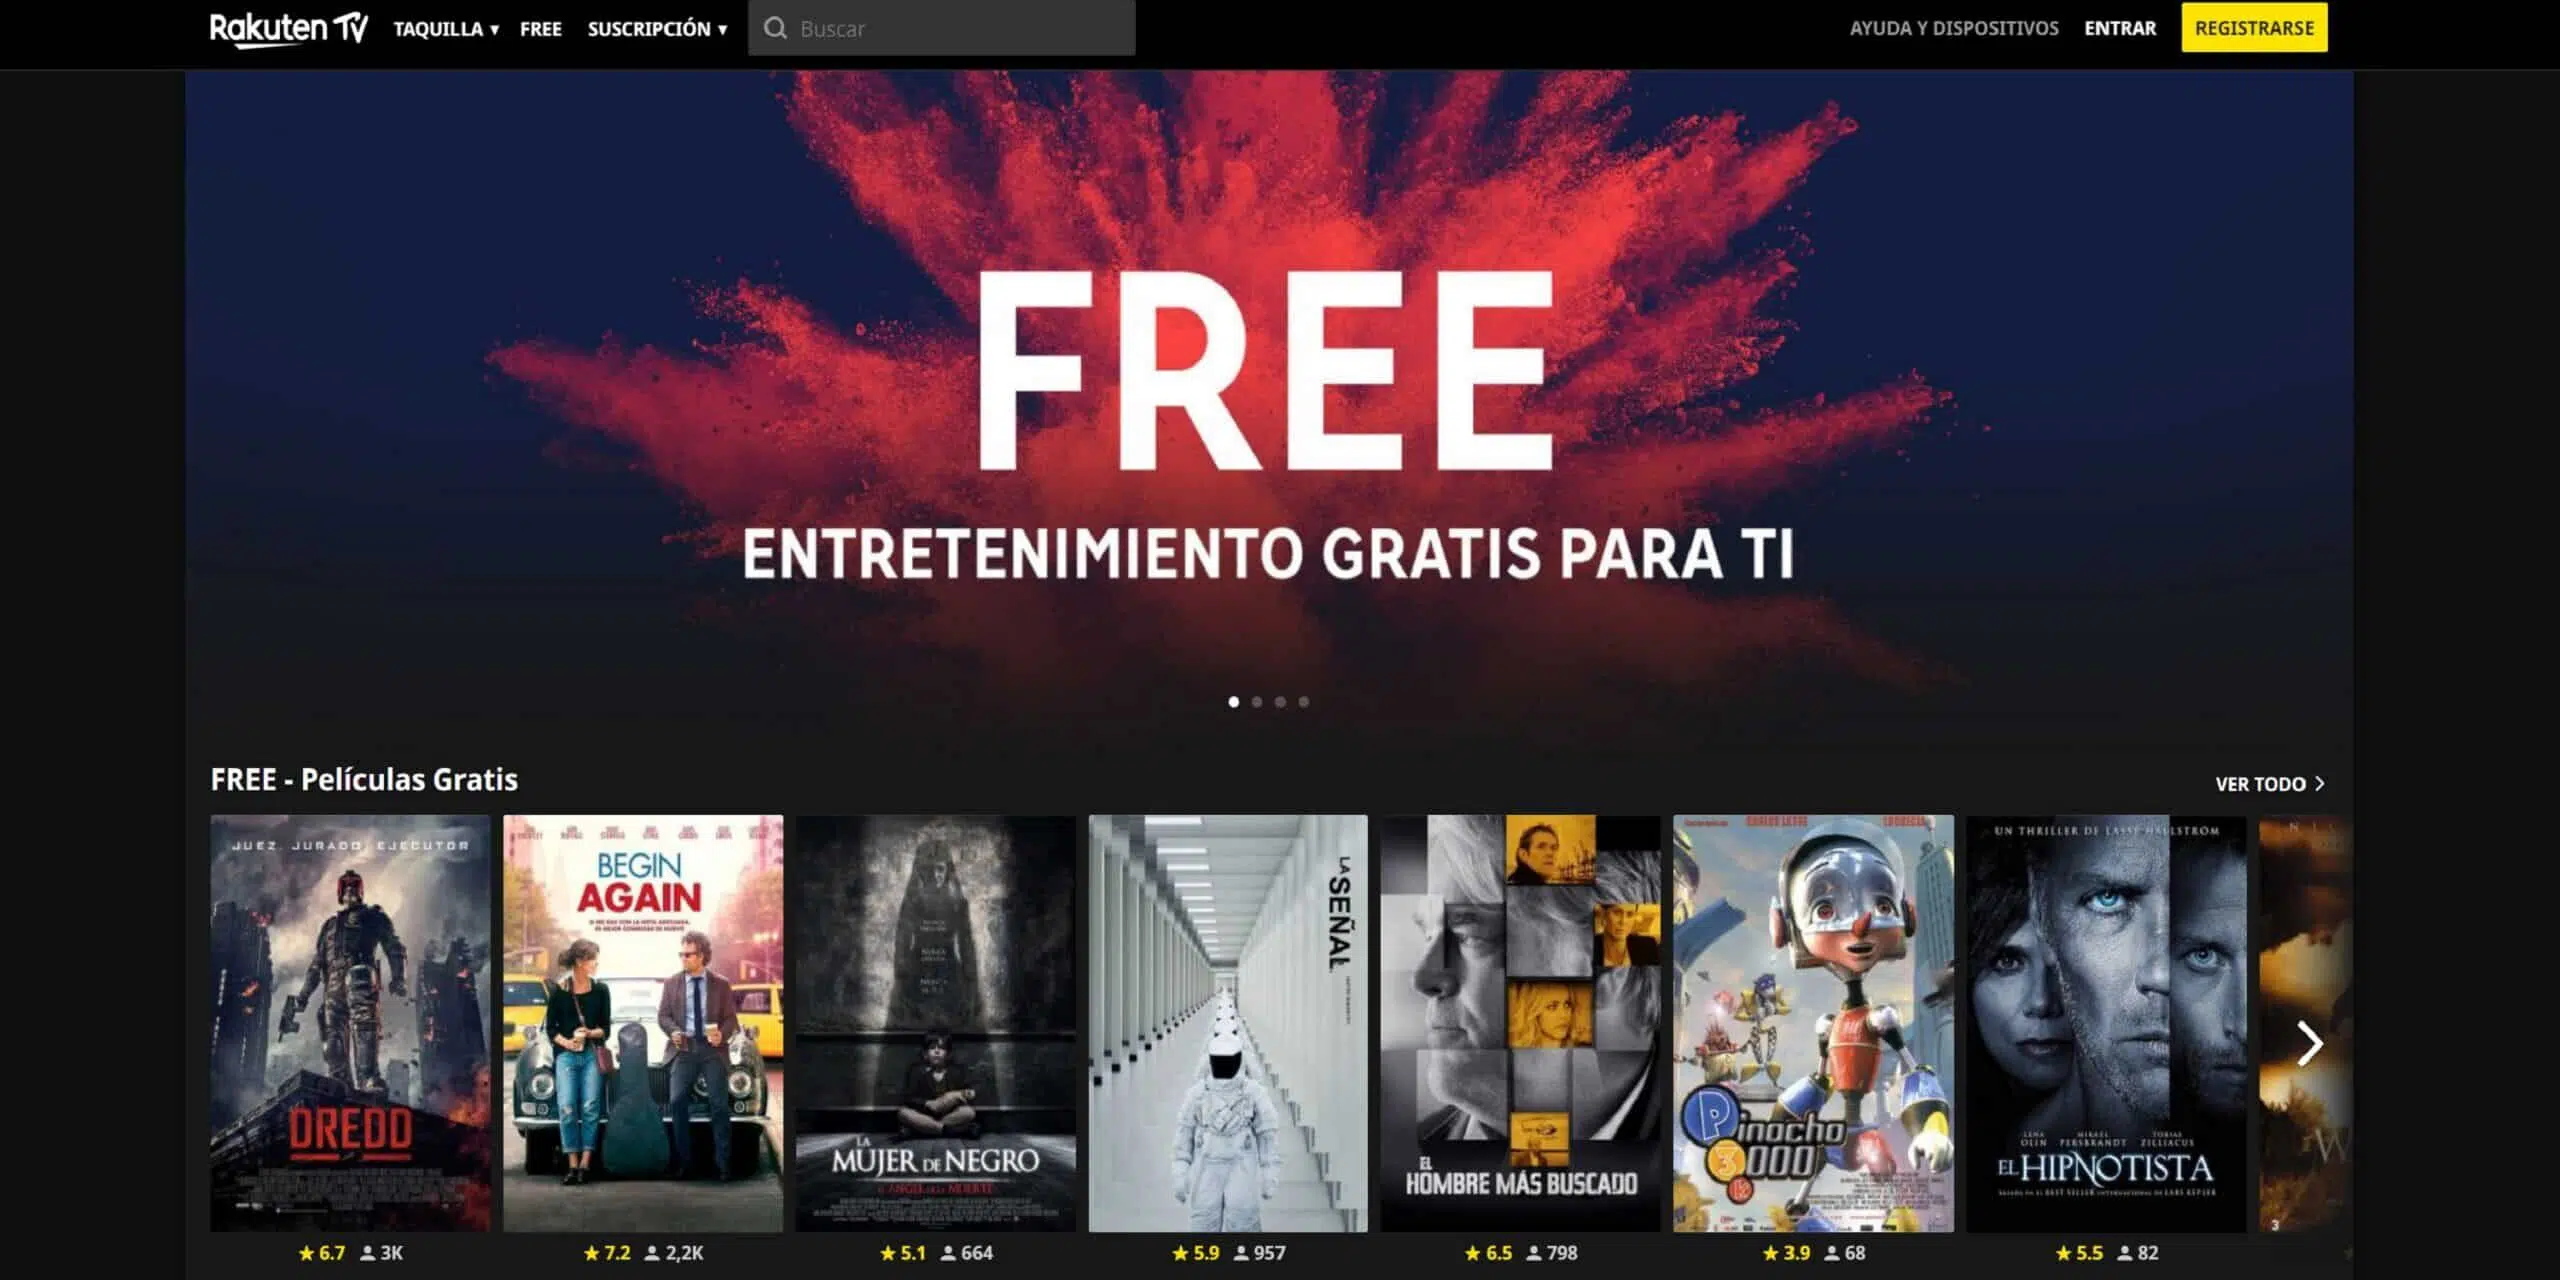 sitevalenciagb – Movies Made in Spain